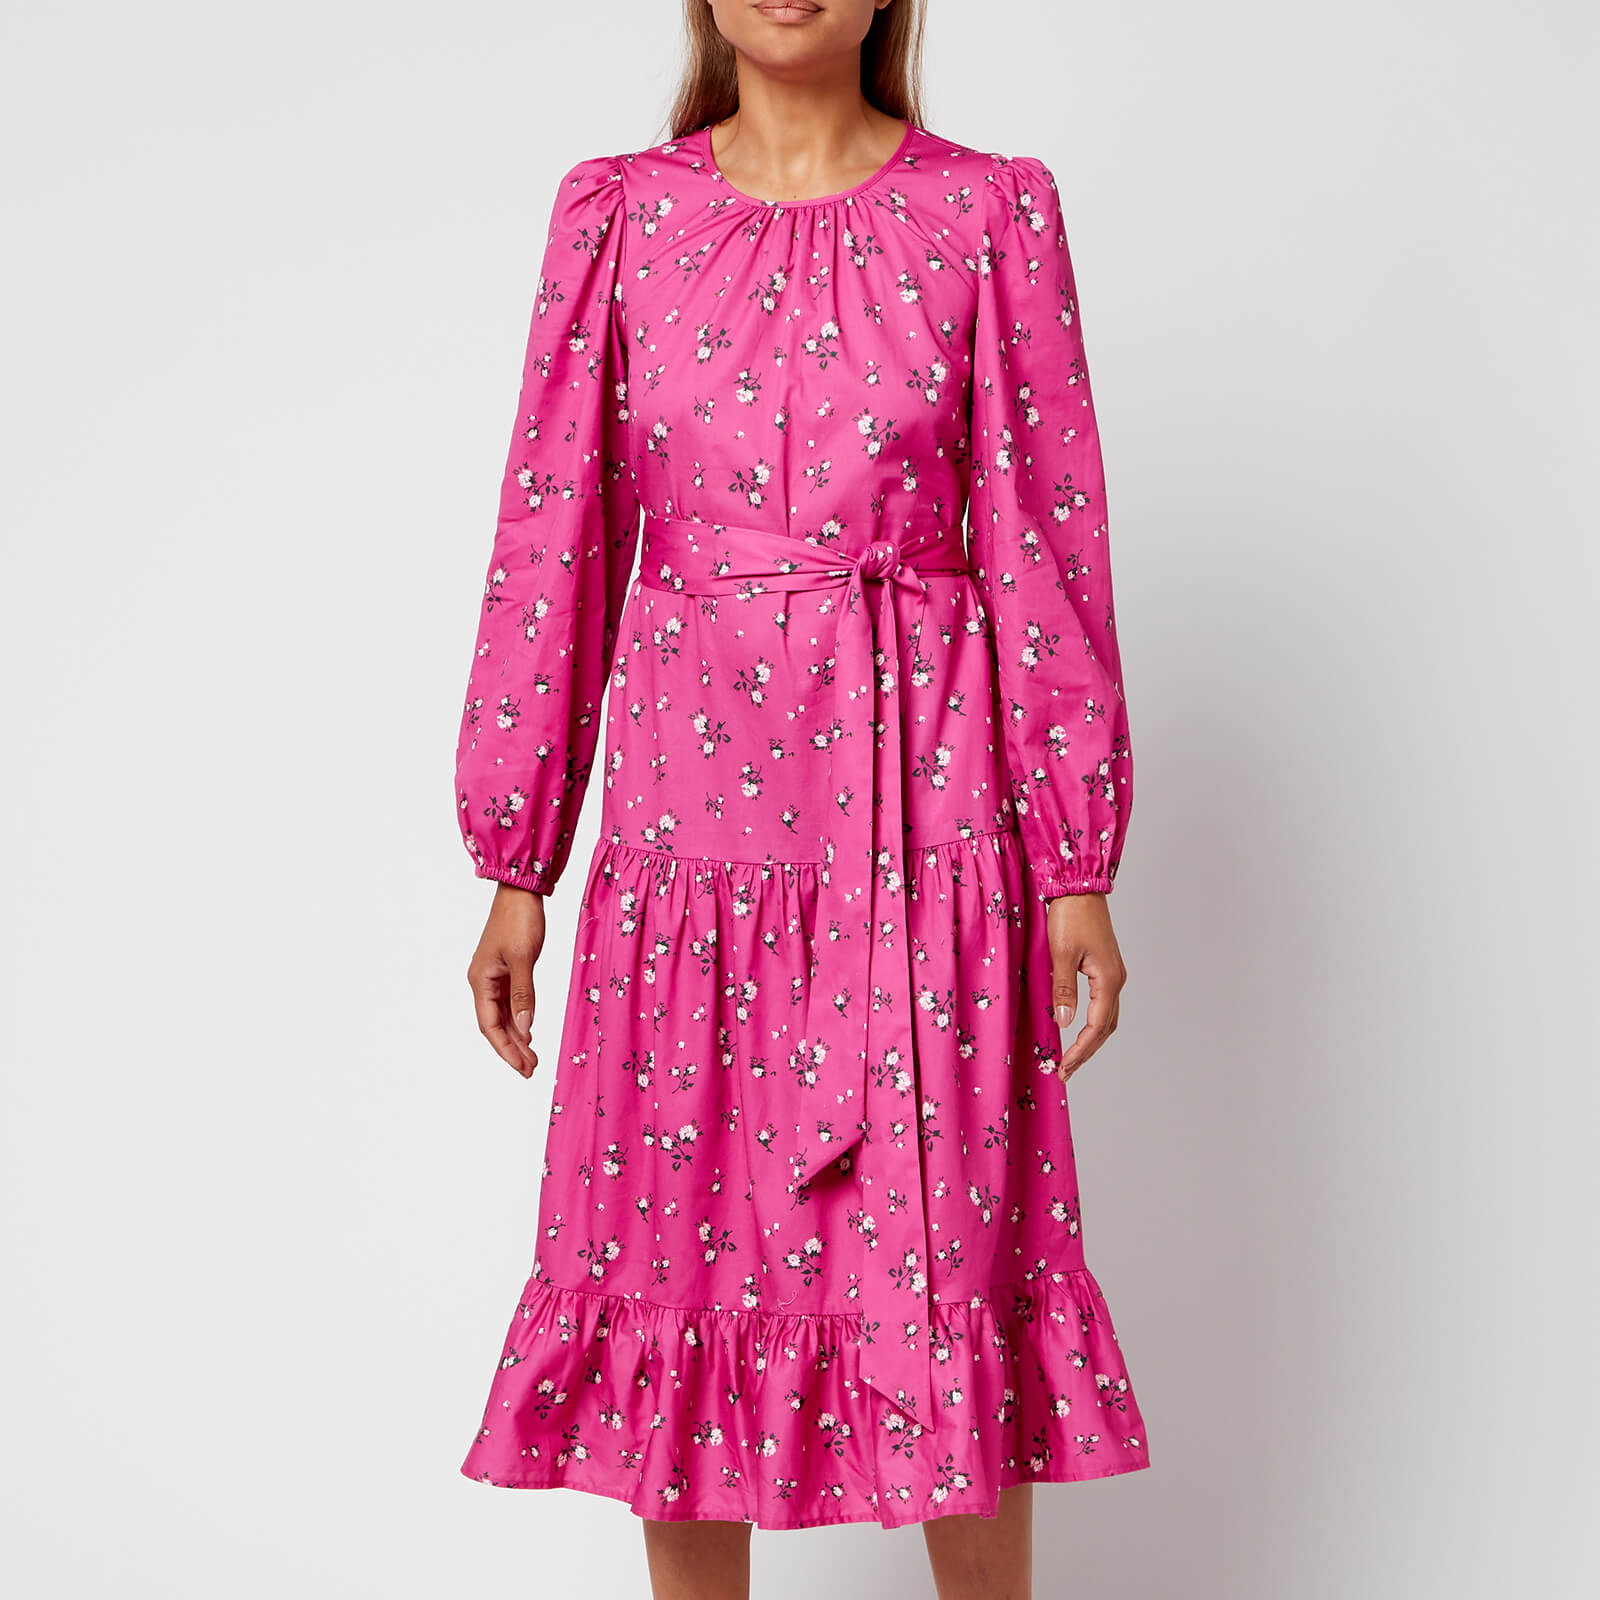 Kitri Women's Alana Floral Dress - Pink Floral - XS